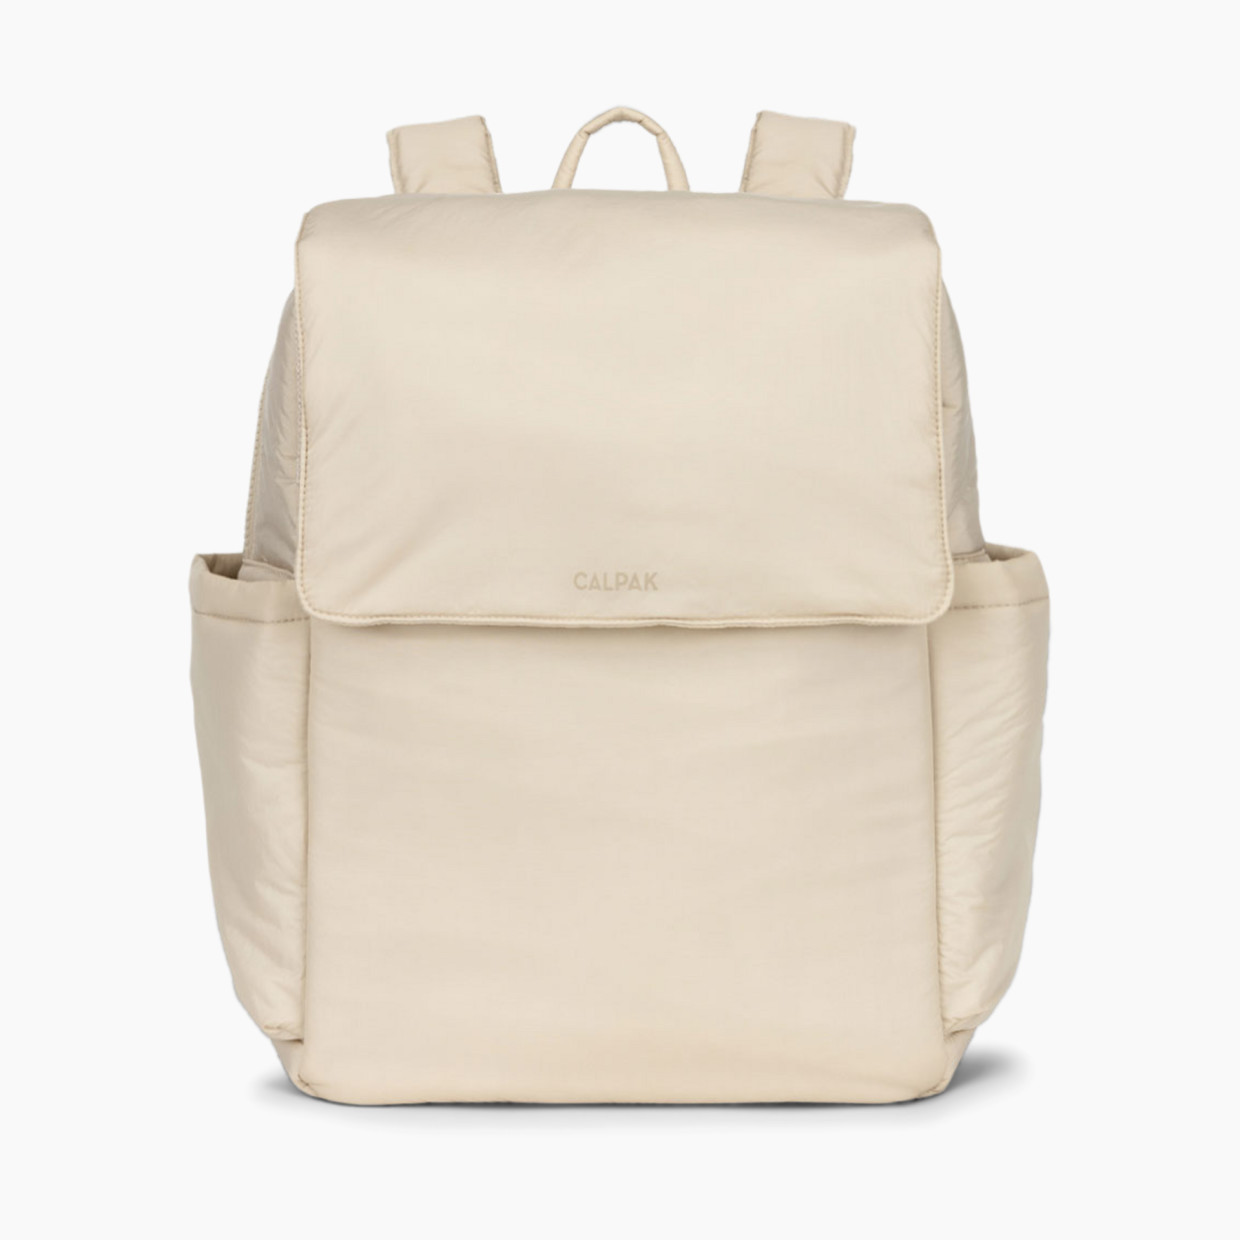 CALPAK Diaper Backpack with Laptop Sleeve - Oatmeal.